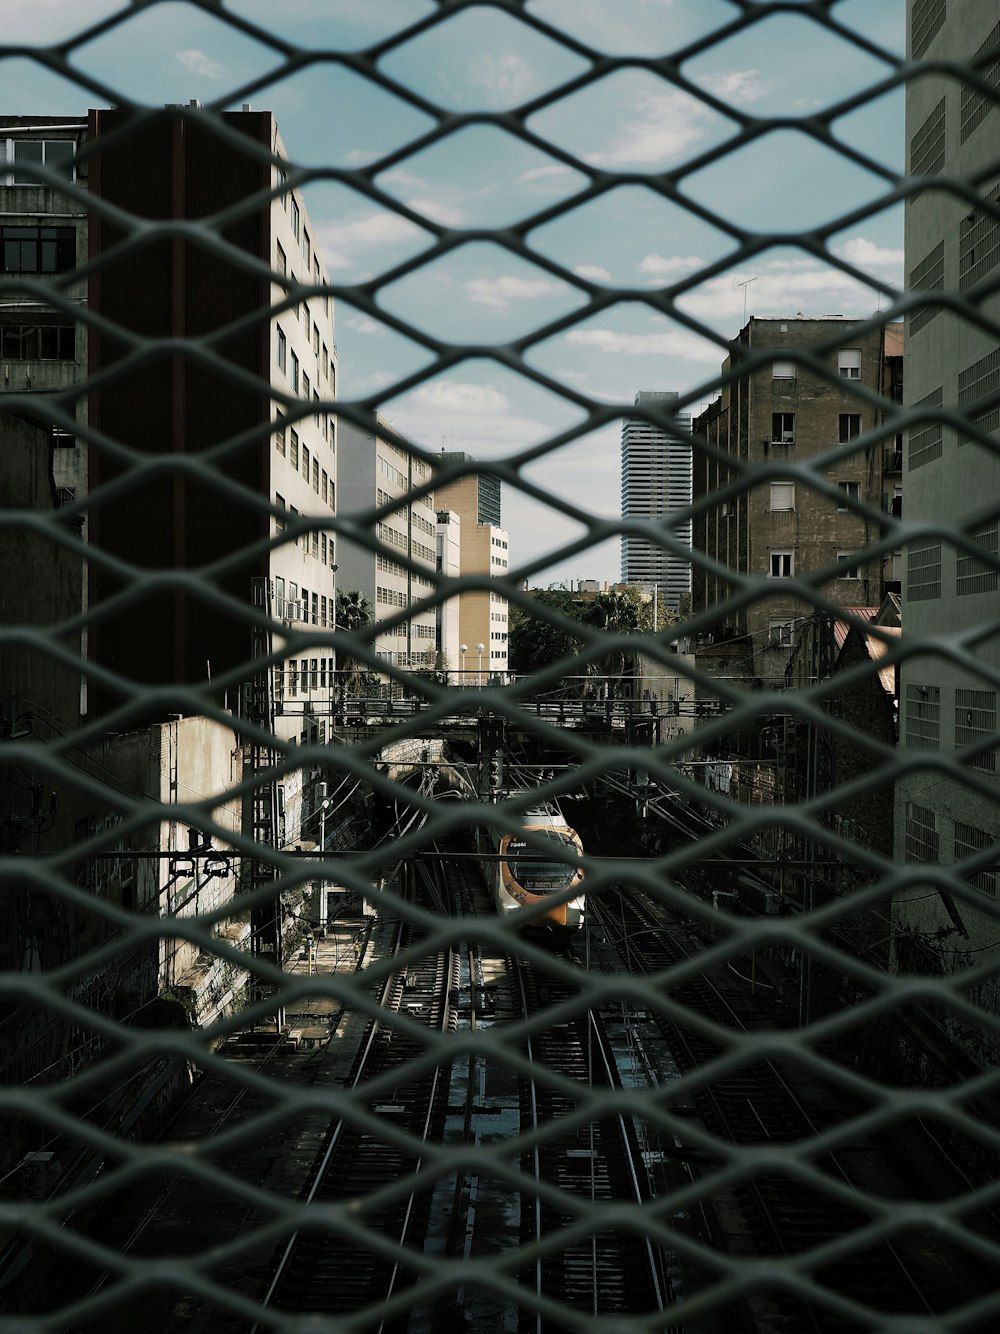 black metal mesh fence near brown concrete building during daytime